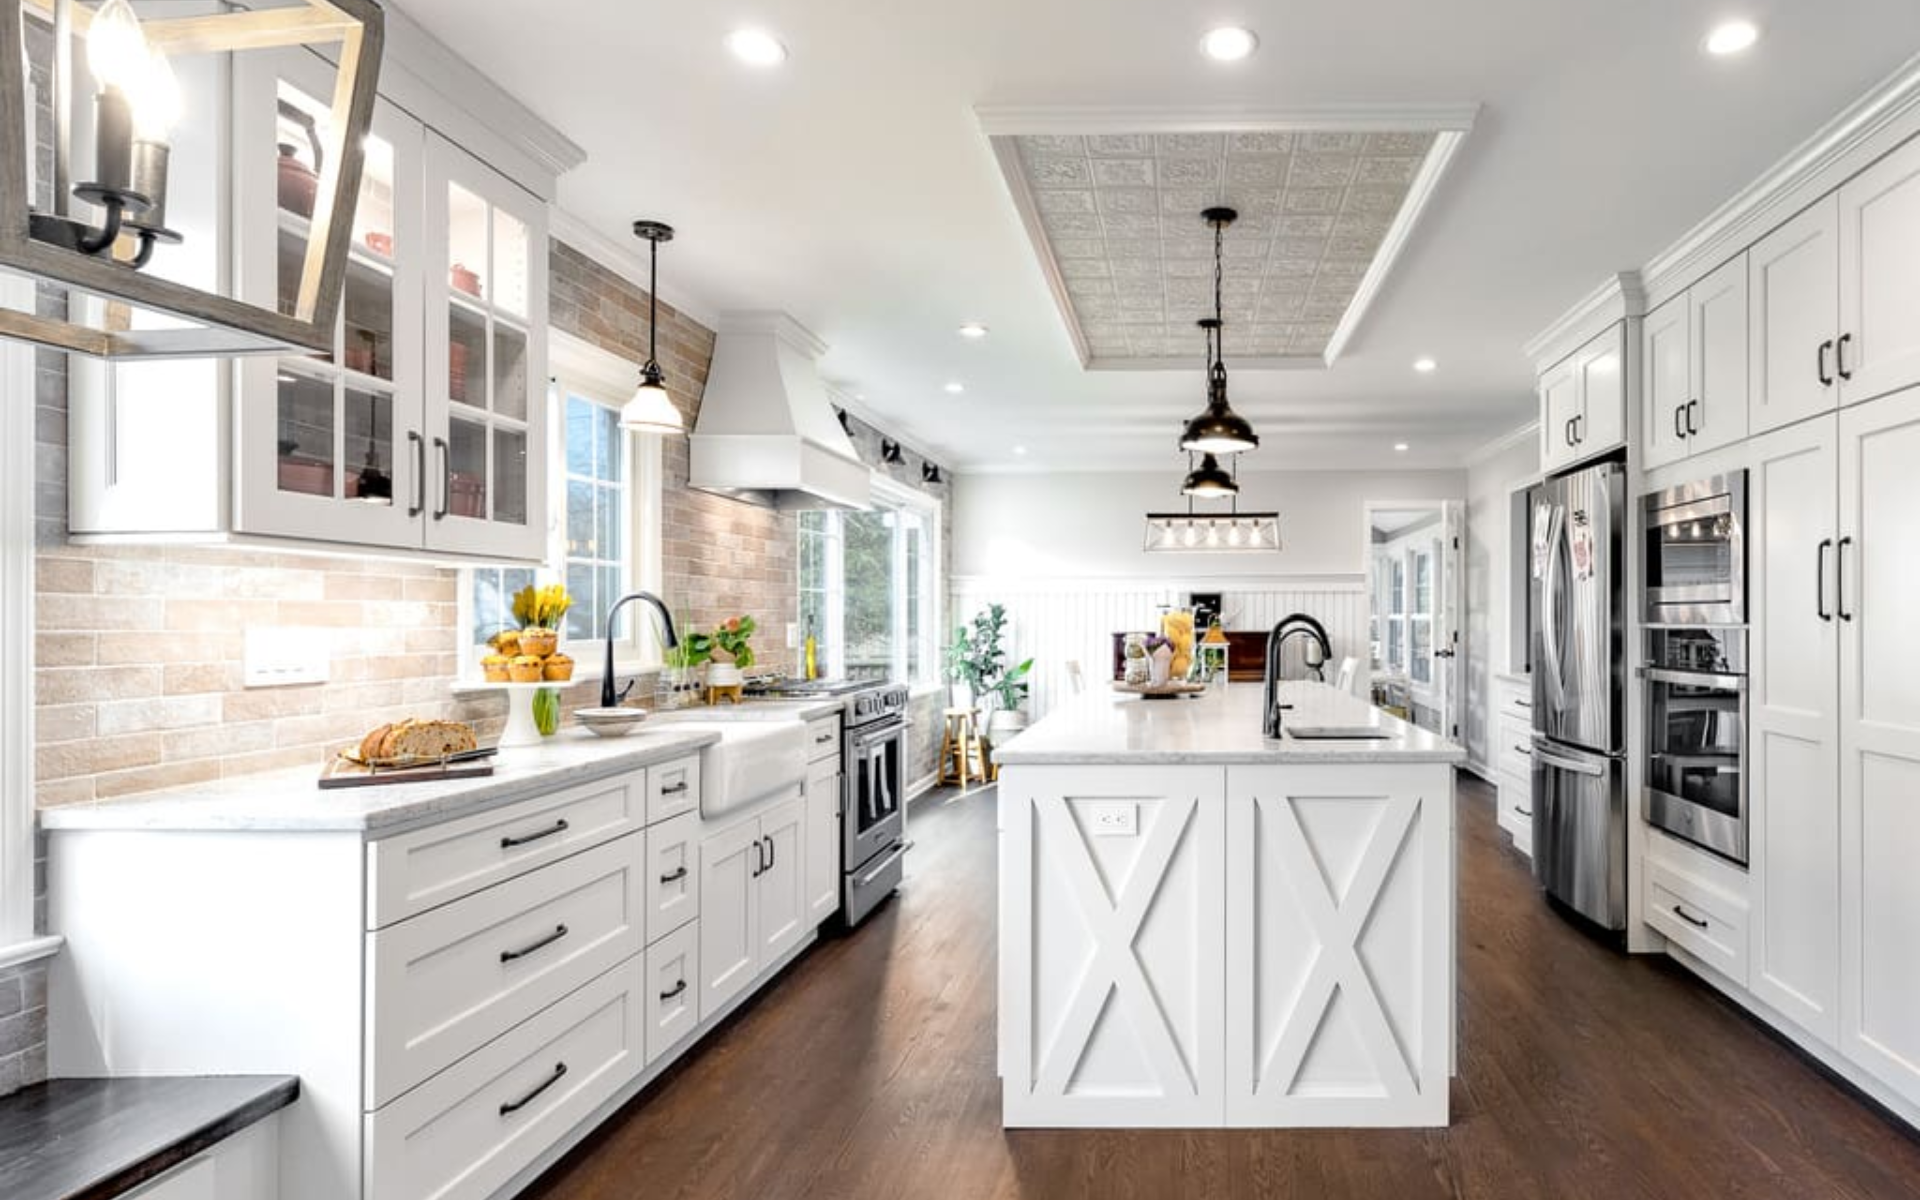 Elegant white kitchen with shaker cabinets and dark wood flooring